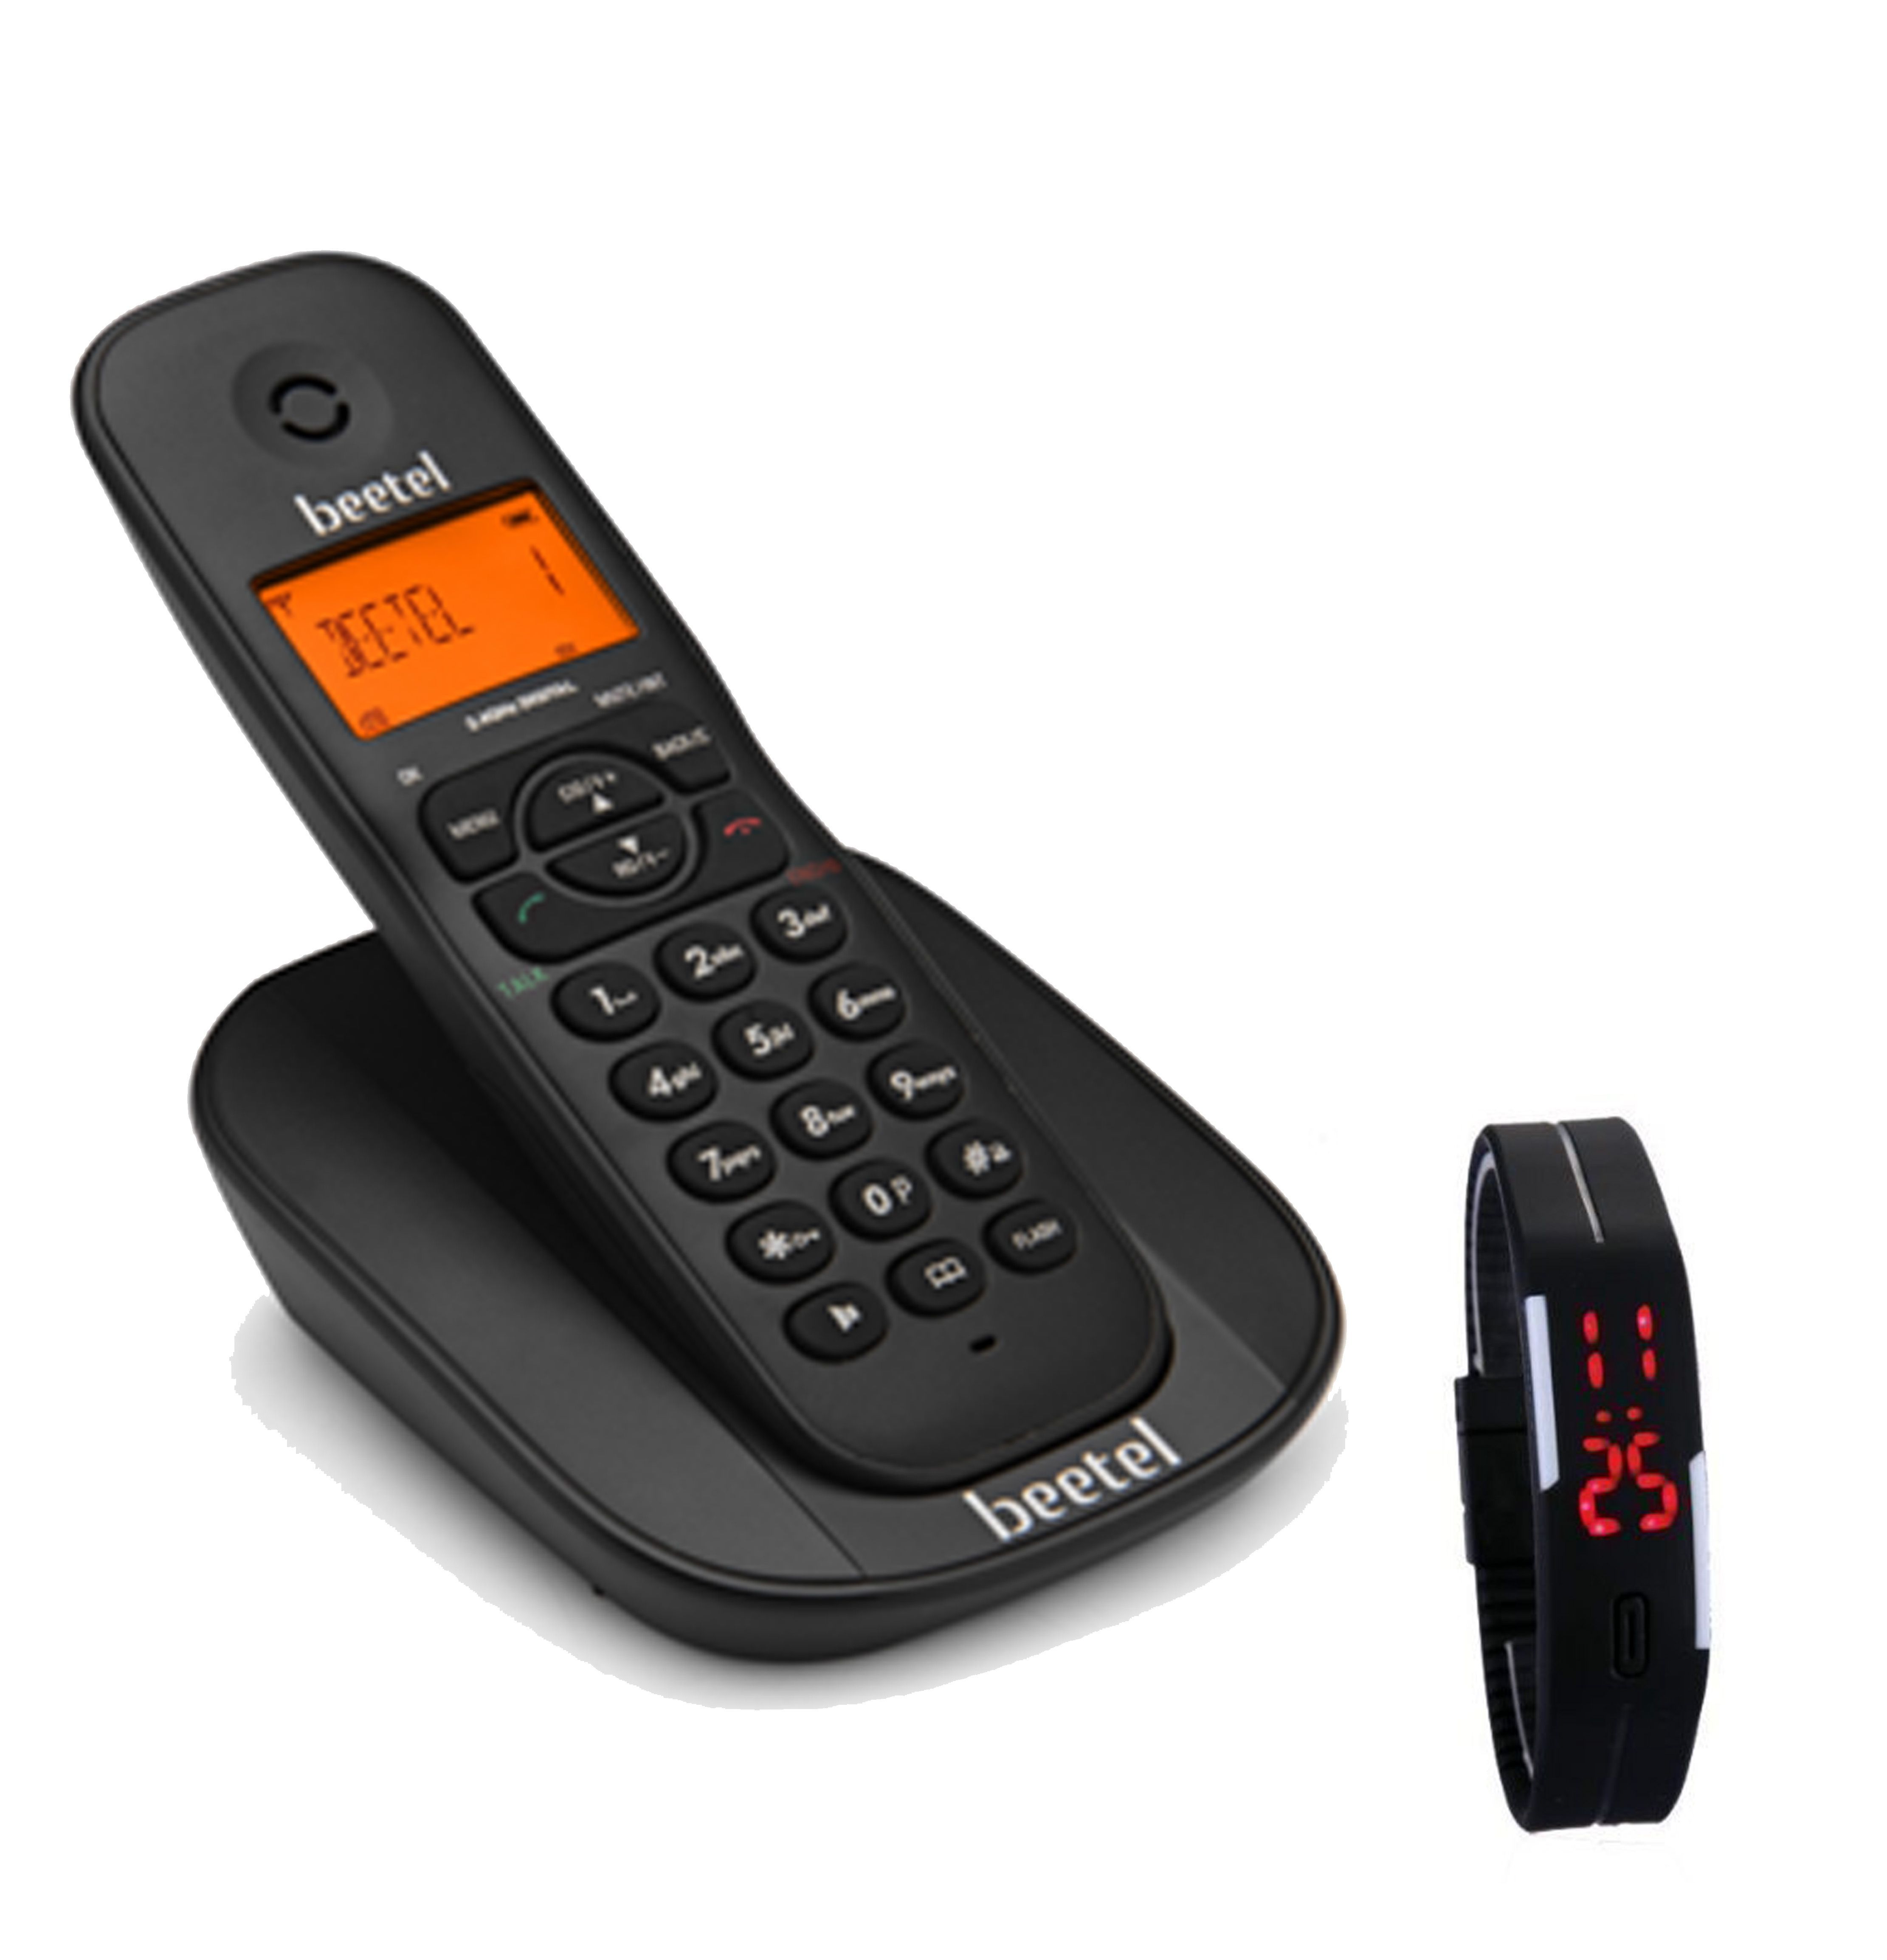     			Beetel BEETEL X-73 CORDLESS PHONE Cordless Landline Phone ( Black )